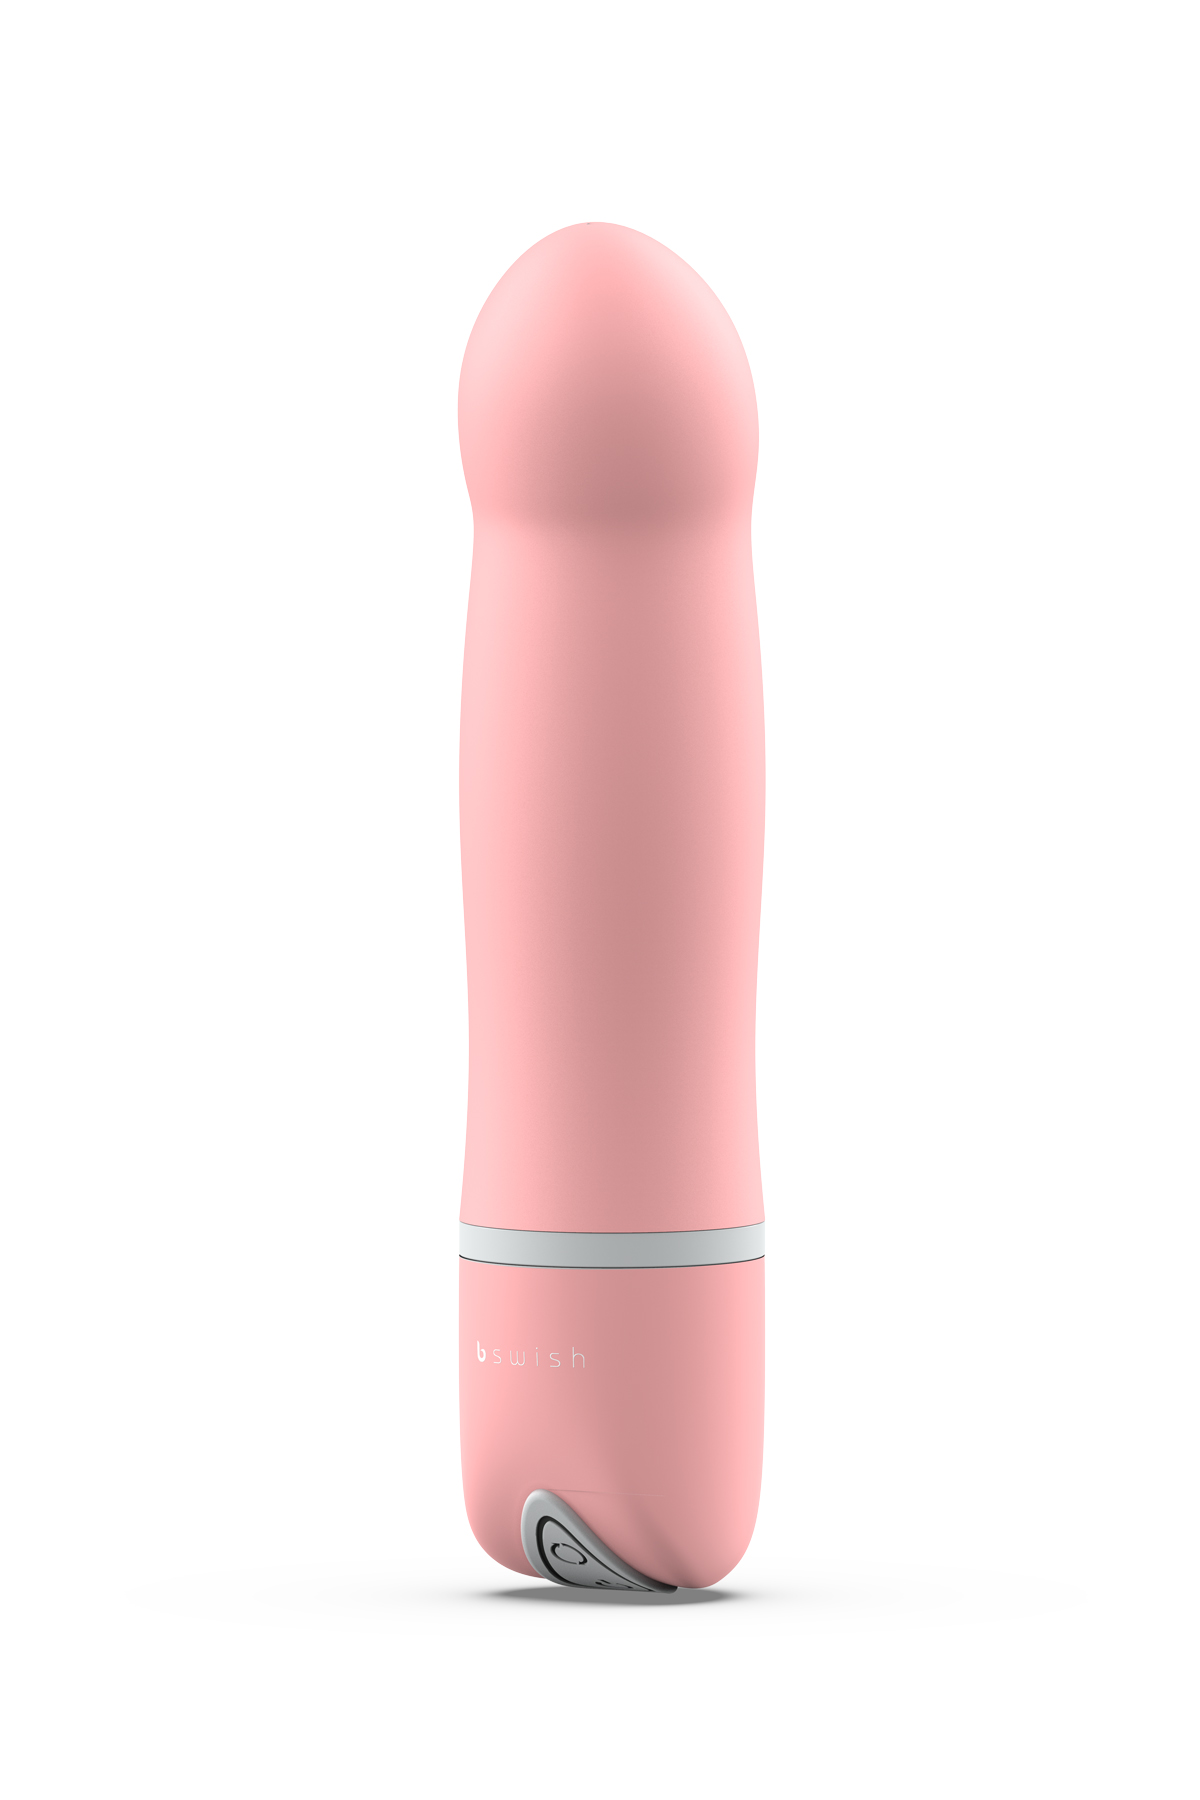 B Swish Bdesired Deluxe Nude Vibrator